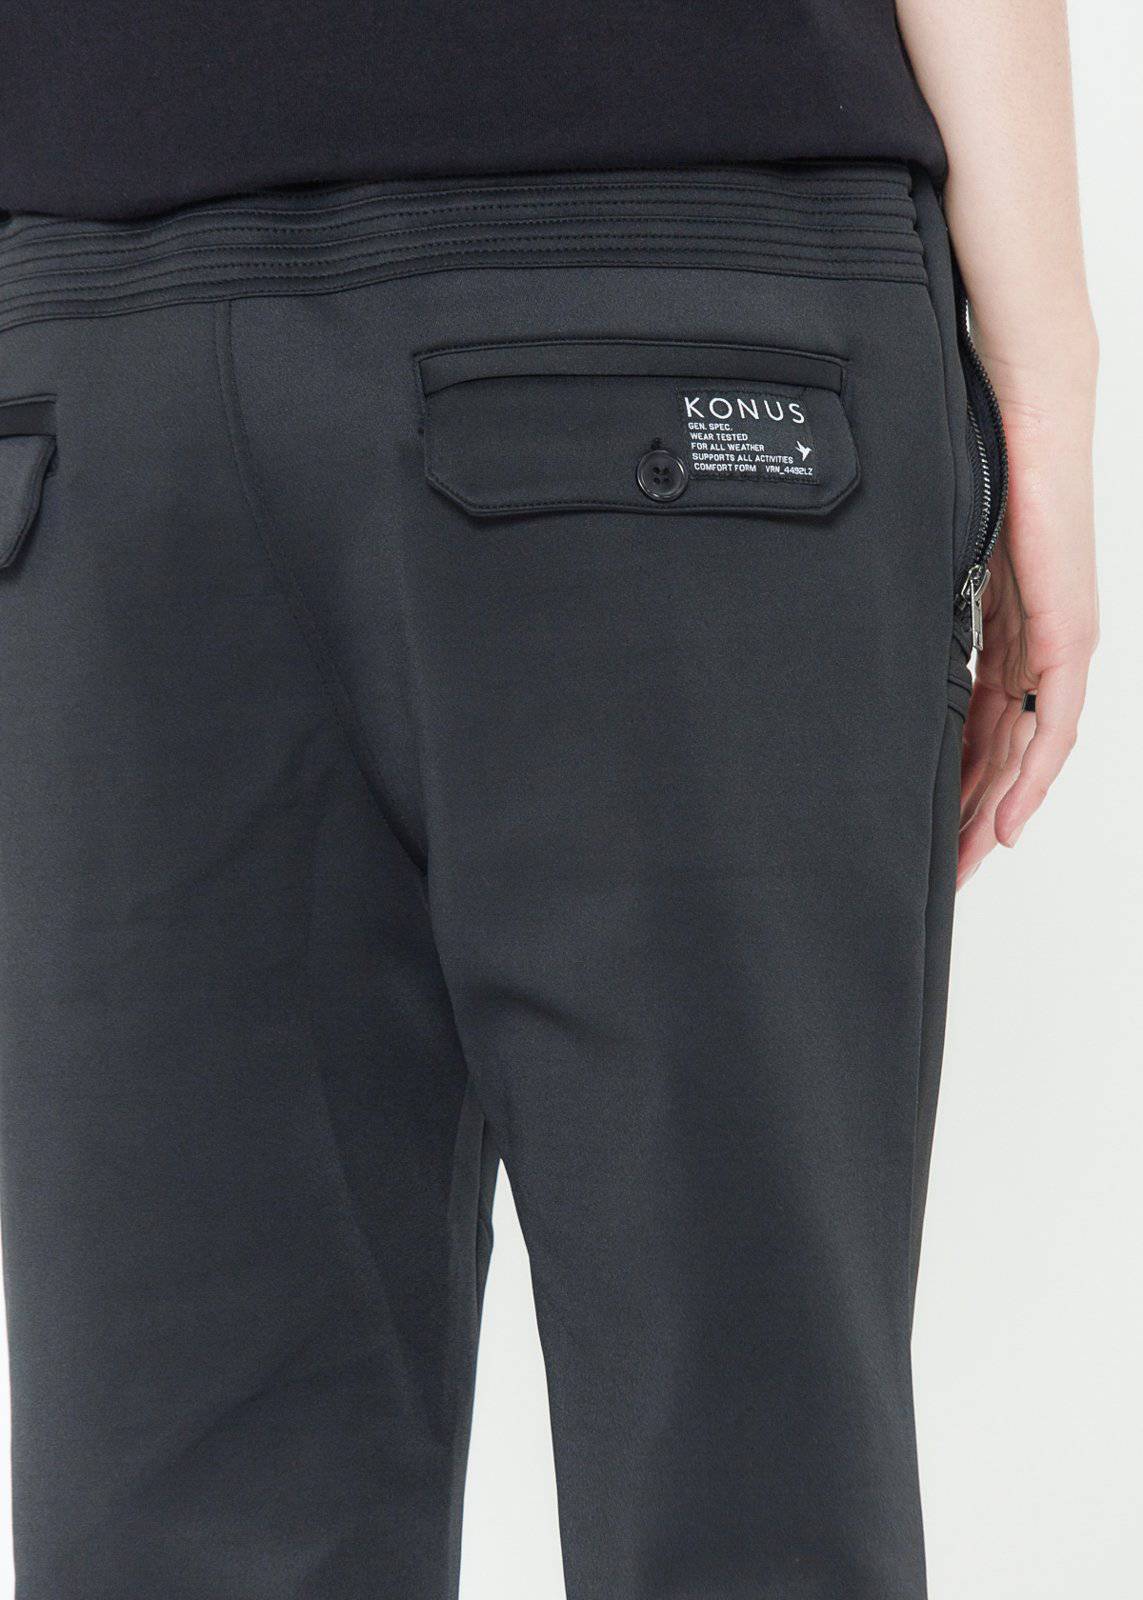 Konus Men's Track Pants With Pin Tuck Details in Black | Shop at Konus